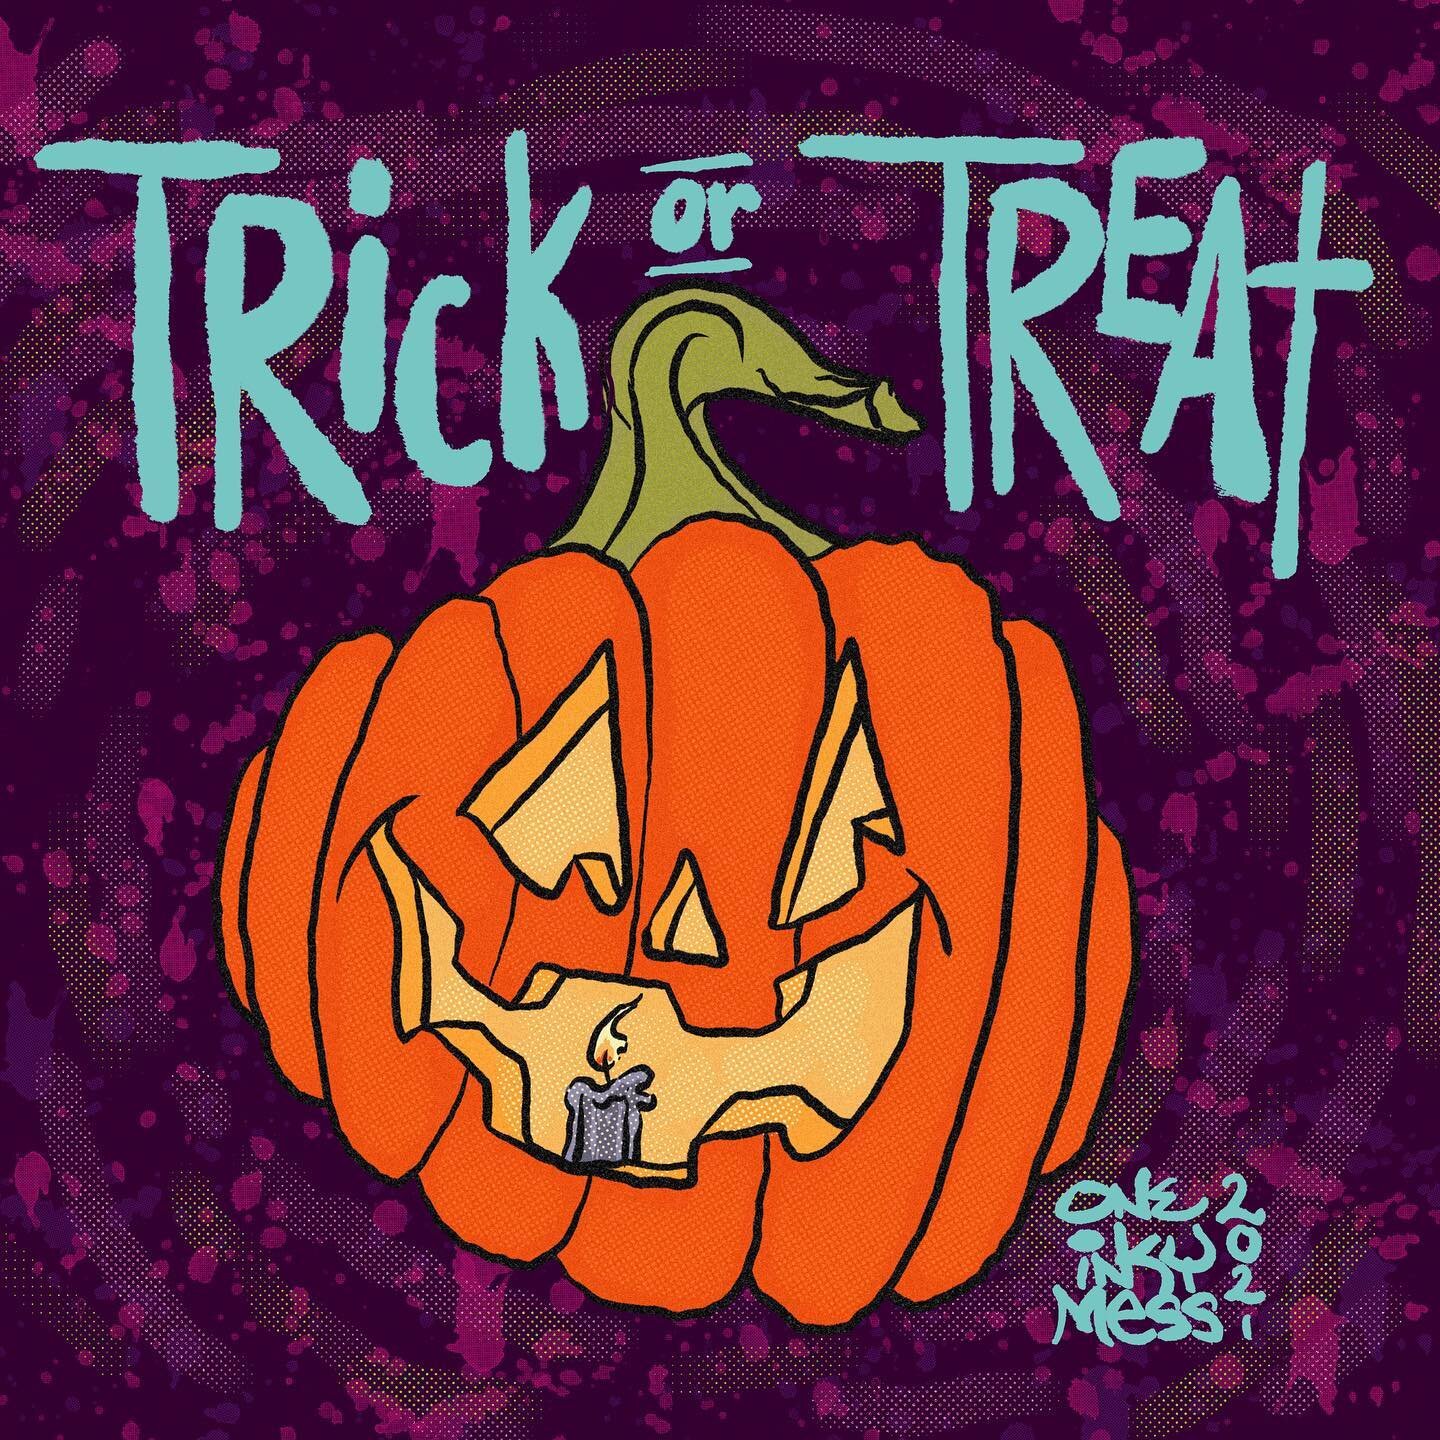 🎃 Happy 👻 Halloween! 🎃
.
.
.
.
.
#happyhalloween #getinky #halloween #illustration #procreate #graphicdesign #graphicdesigner #spookyseason #trickortreat